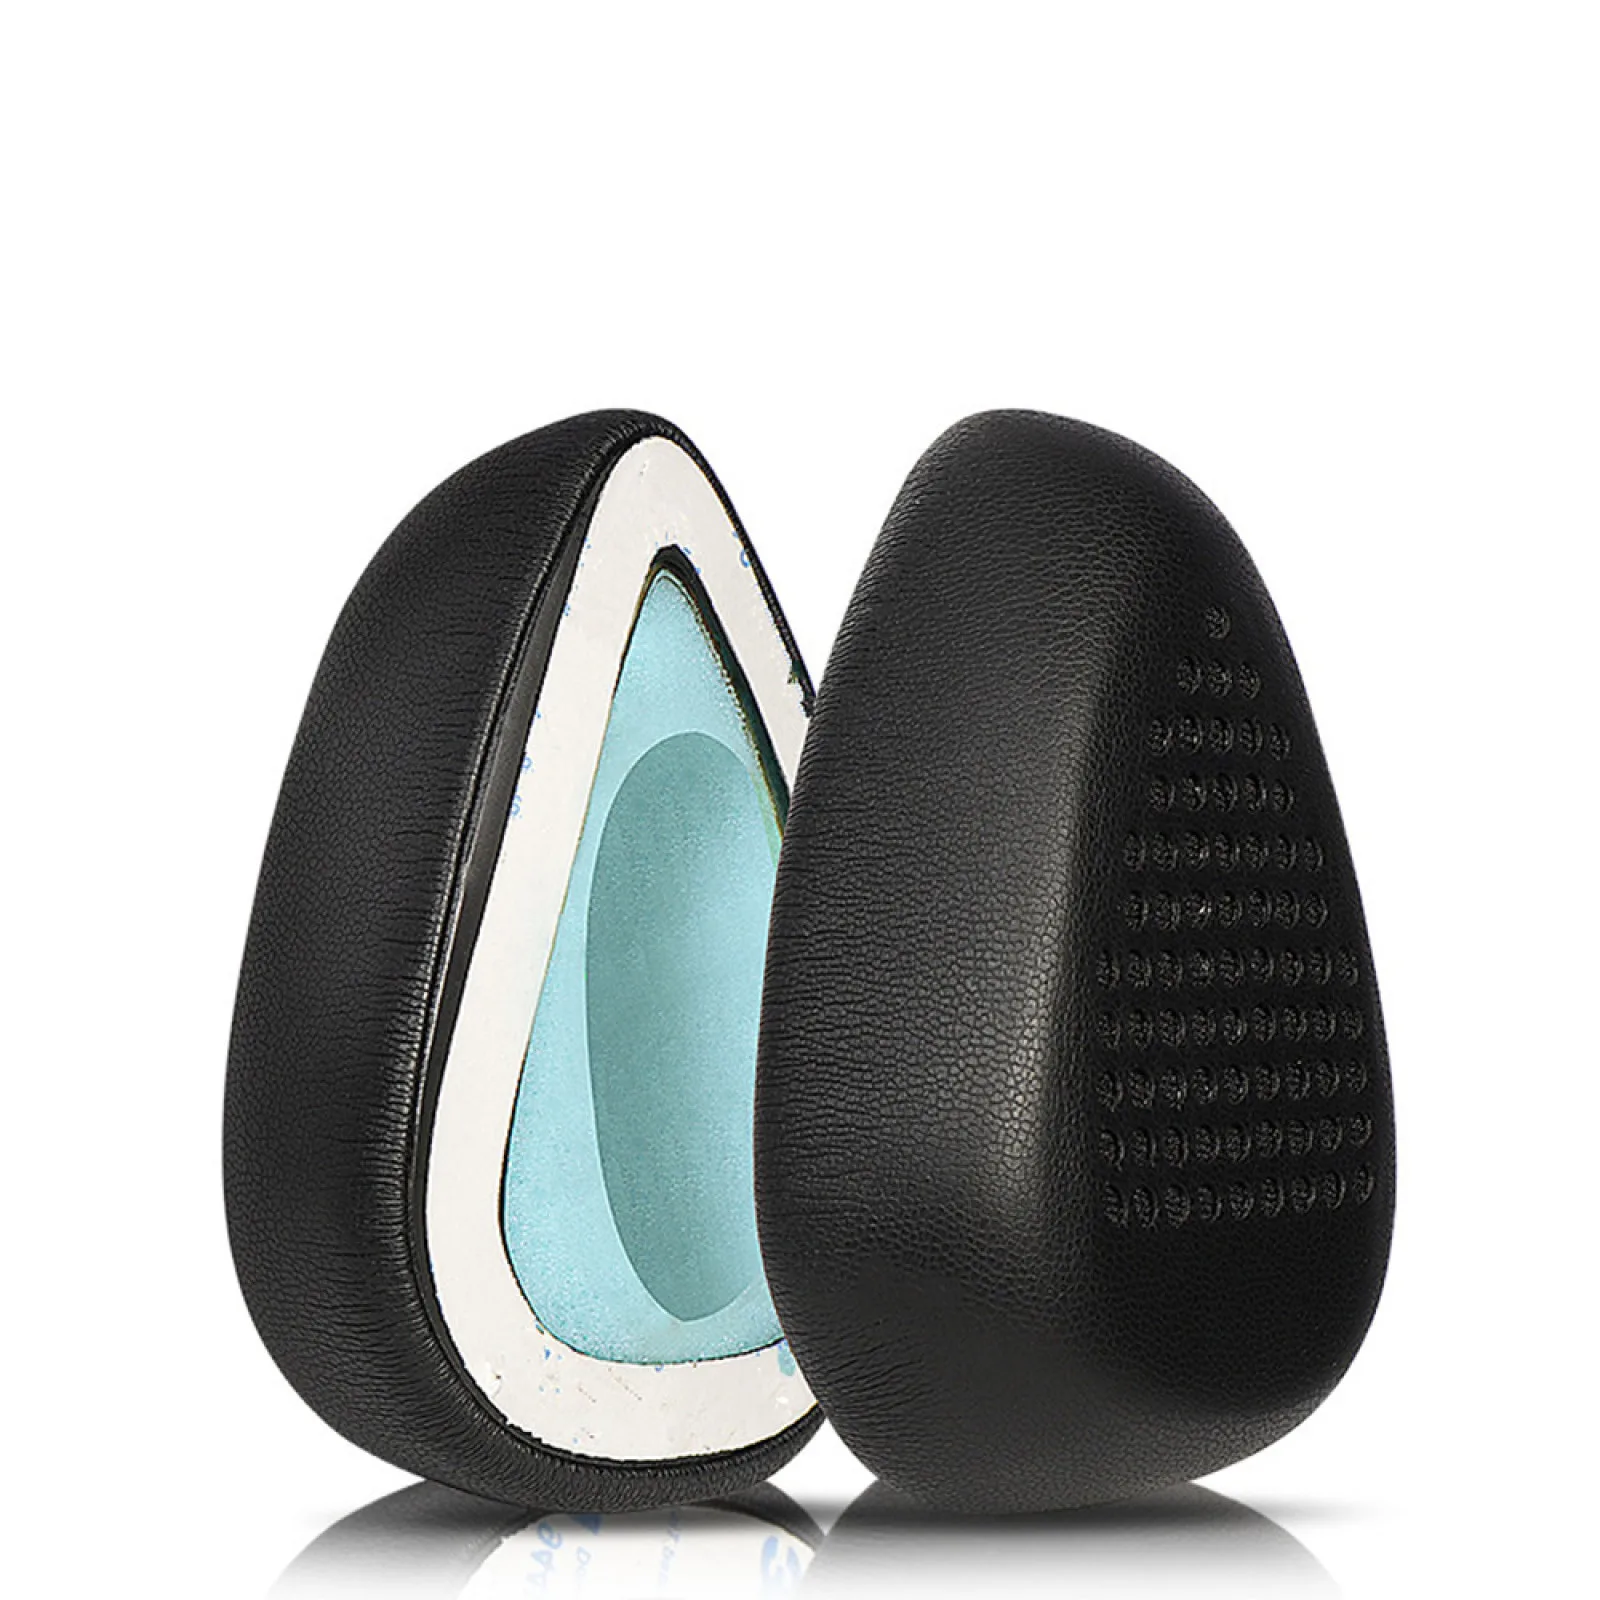 For Razer Dva Meka Headphones Accessories Replacement Soft Sponge Earpads Cushion Covers Headsets Ear Pads Repair Parts